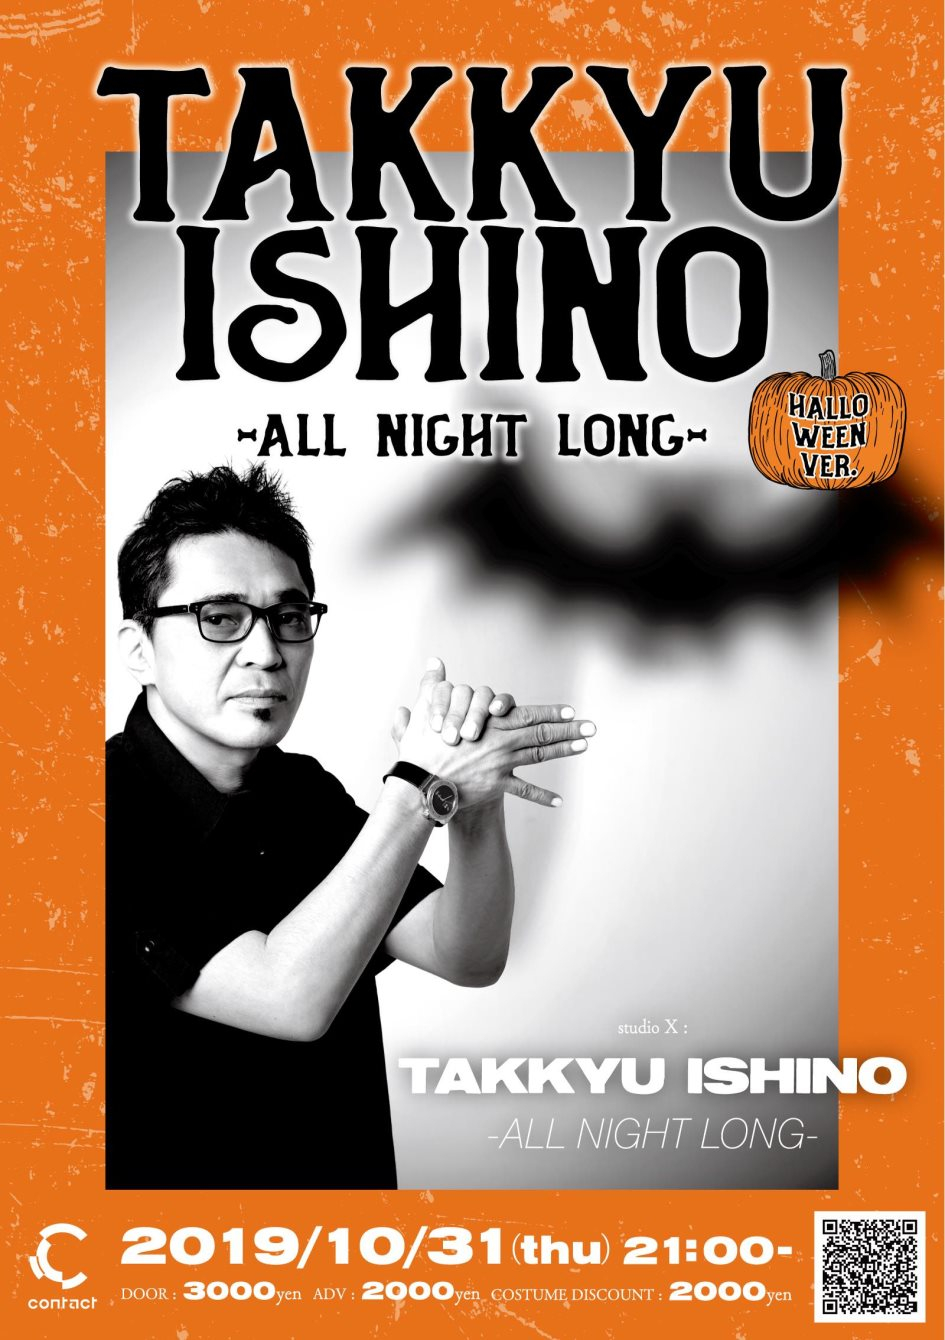 Takkyu Ishino All Night Long - Halloween Ver. - - Flyer front